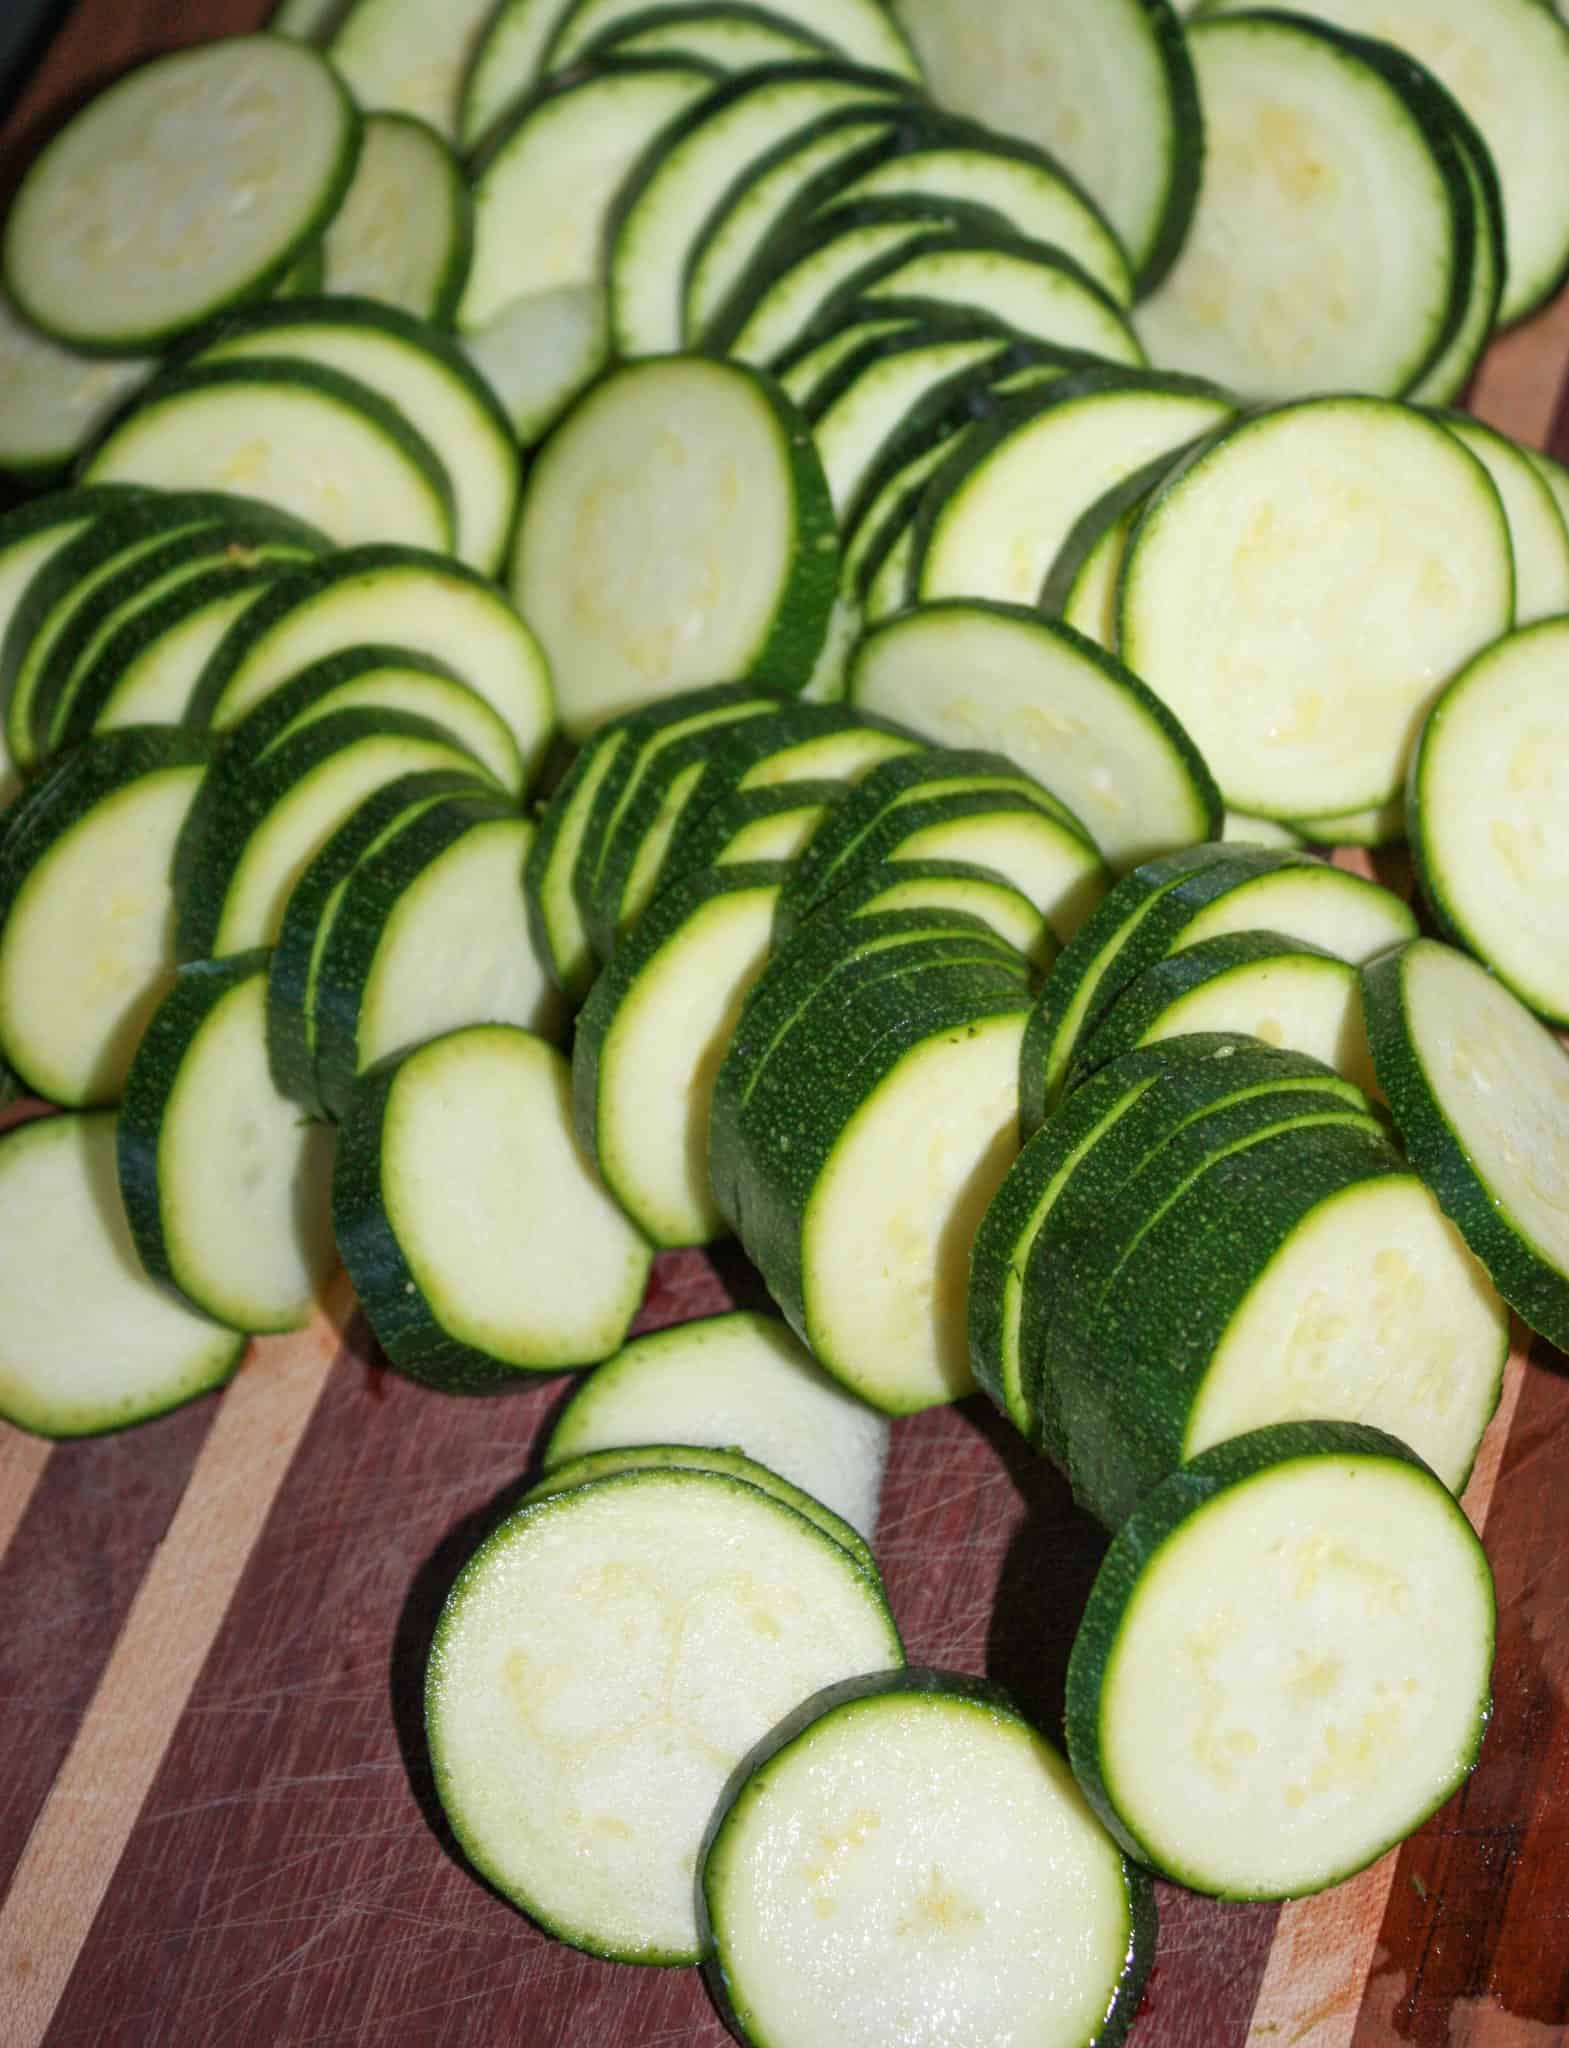 The sliced zucchini.